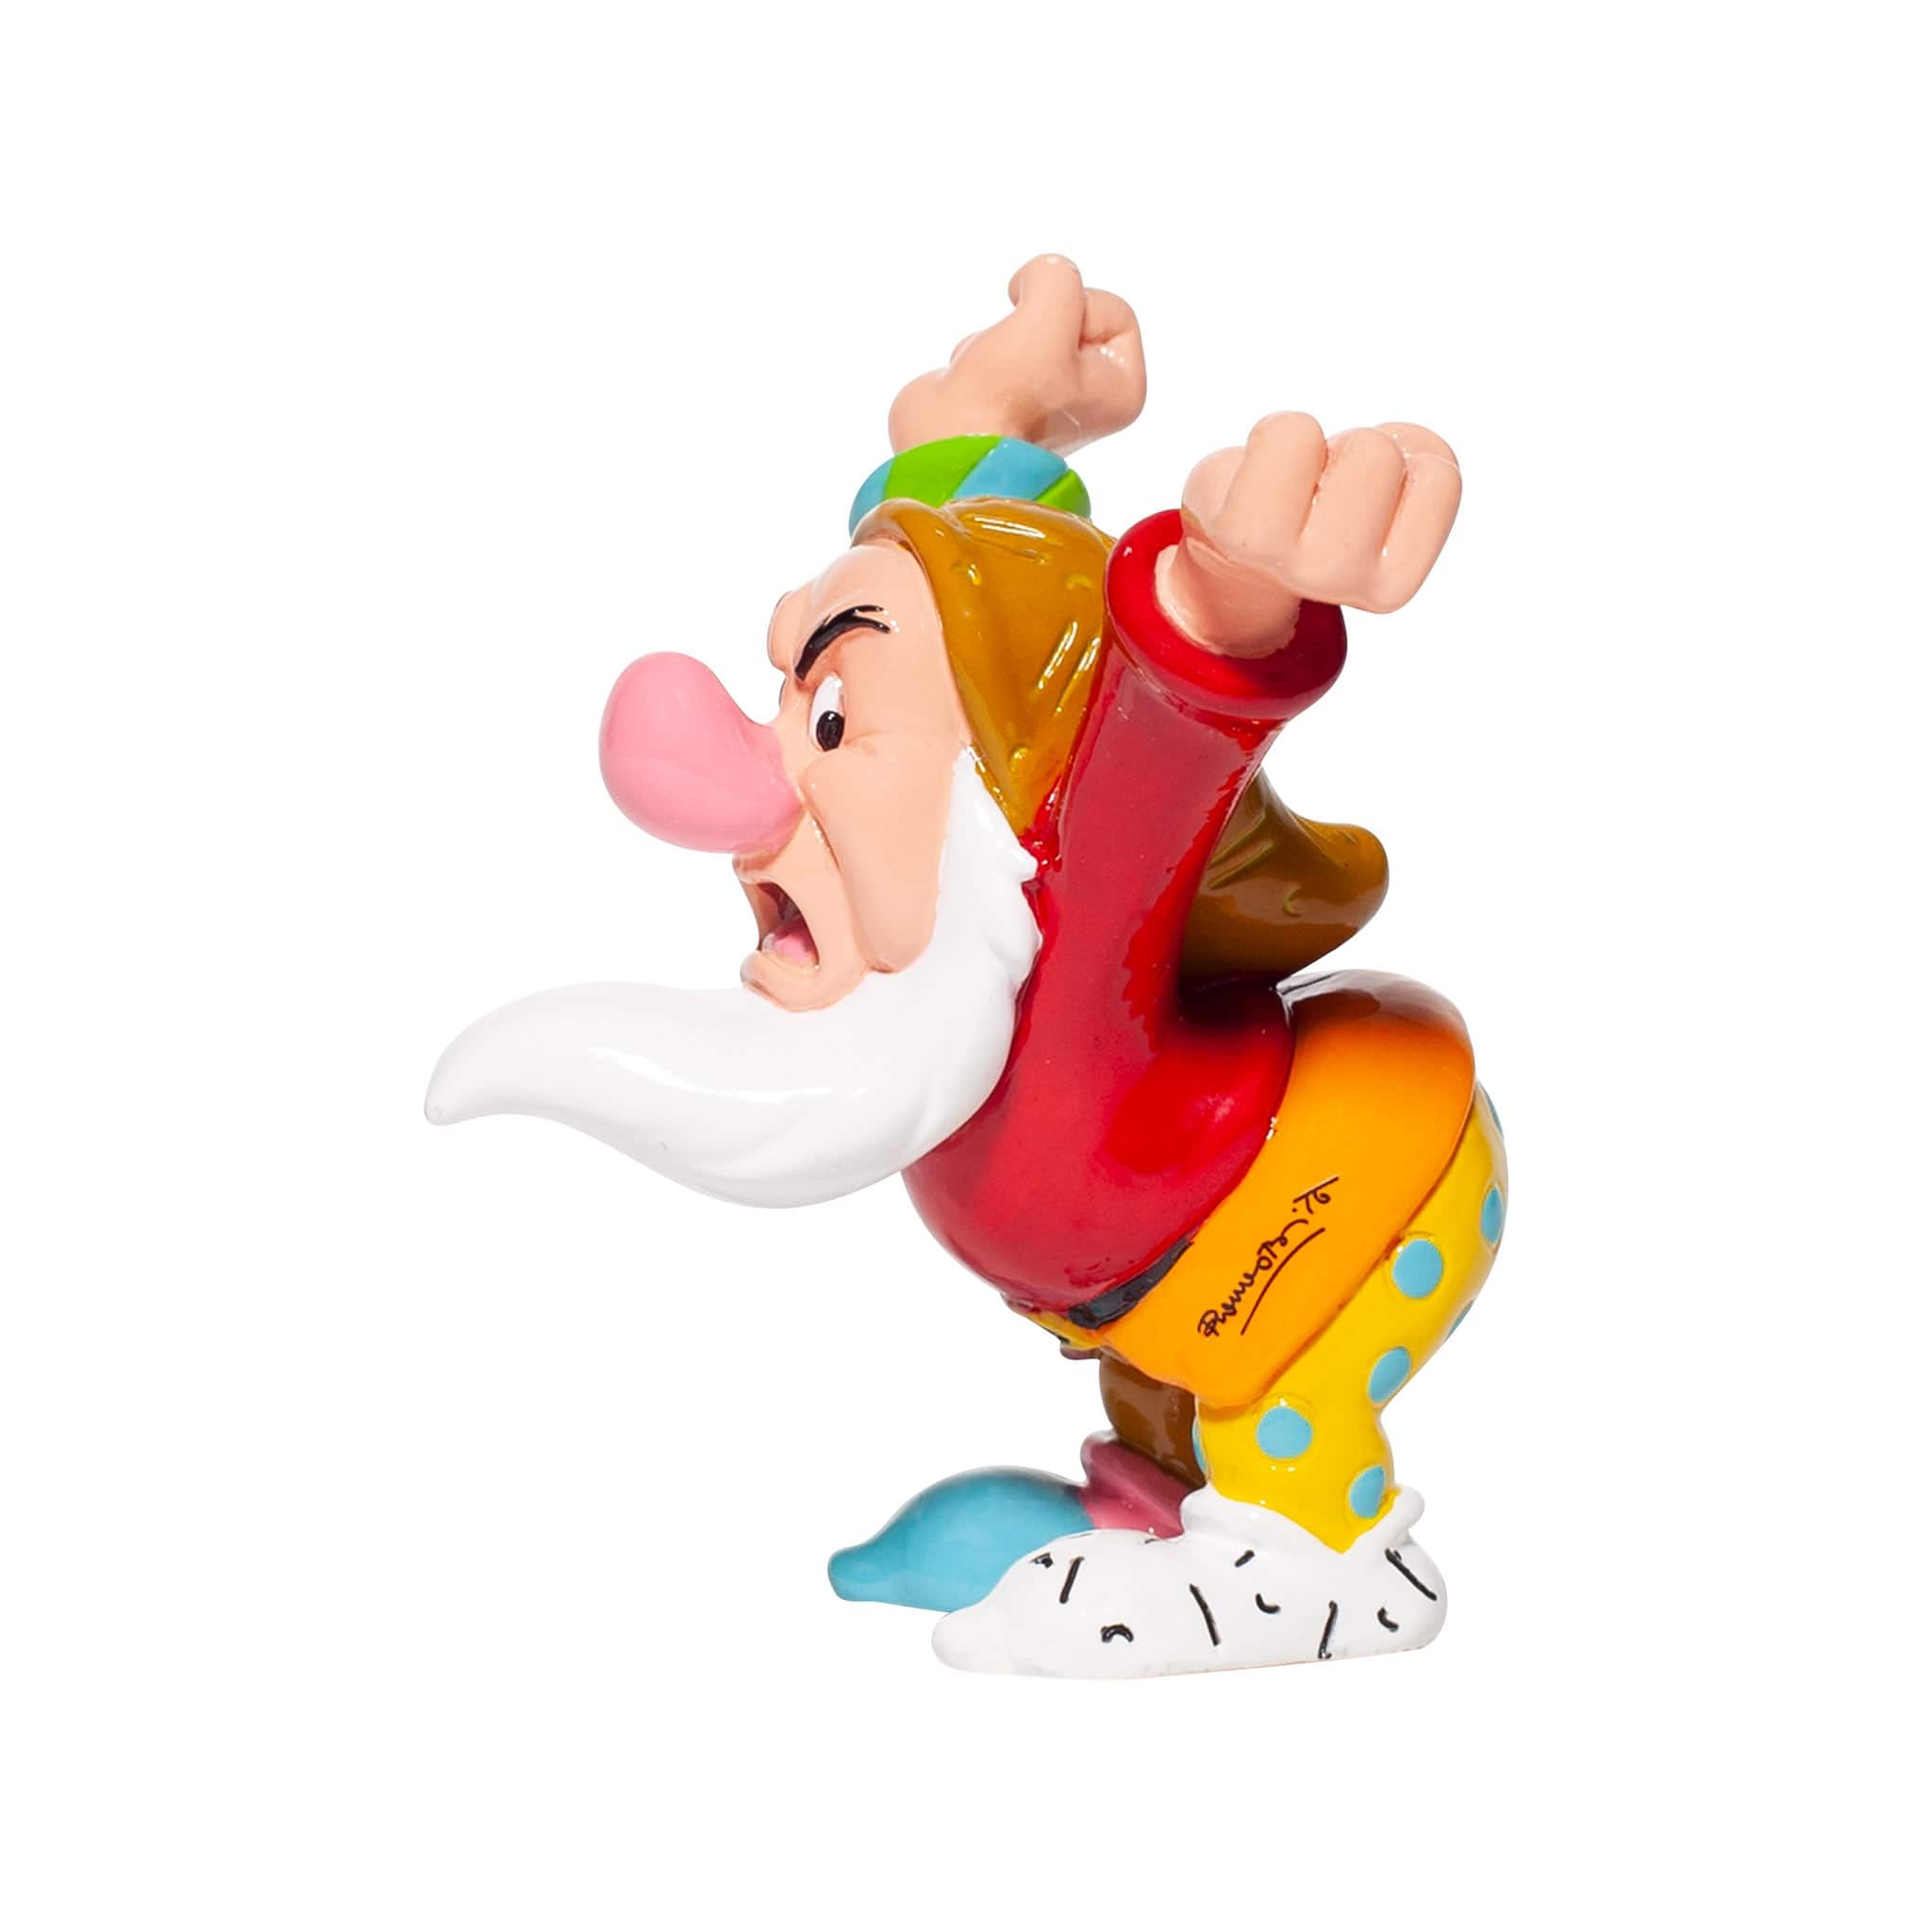 Sammelfigur Disney 7 Zwerge Grumpy Mini Figur